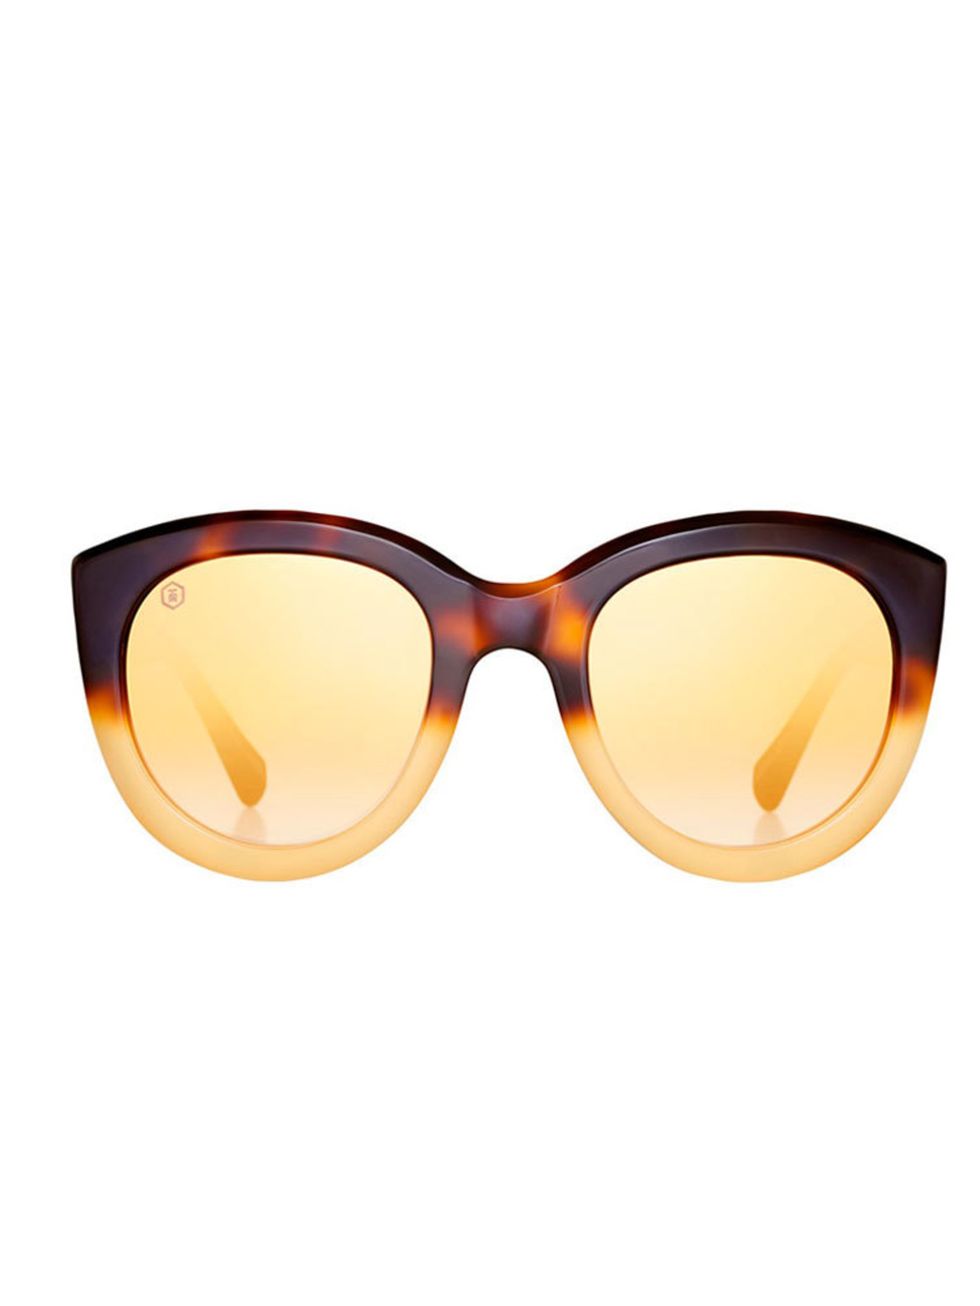 <p><a href="http://taylormorriseyewear.com/shop/collection/women/invidia-c3" target="_blank">Taylor Morris</a> sunglasses, £170</p>